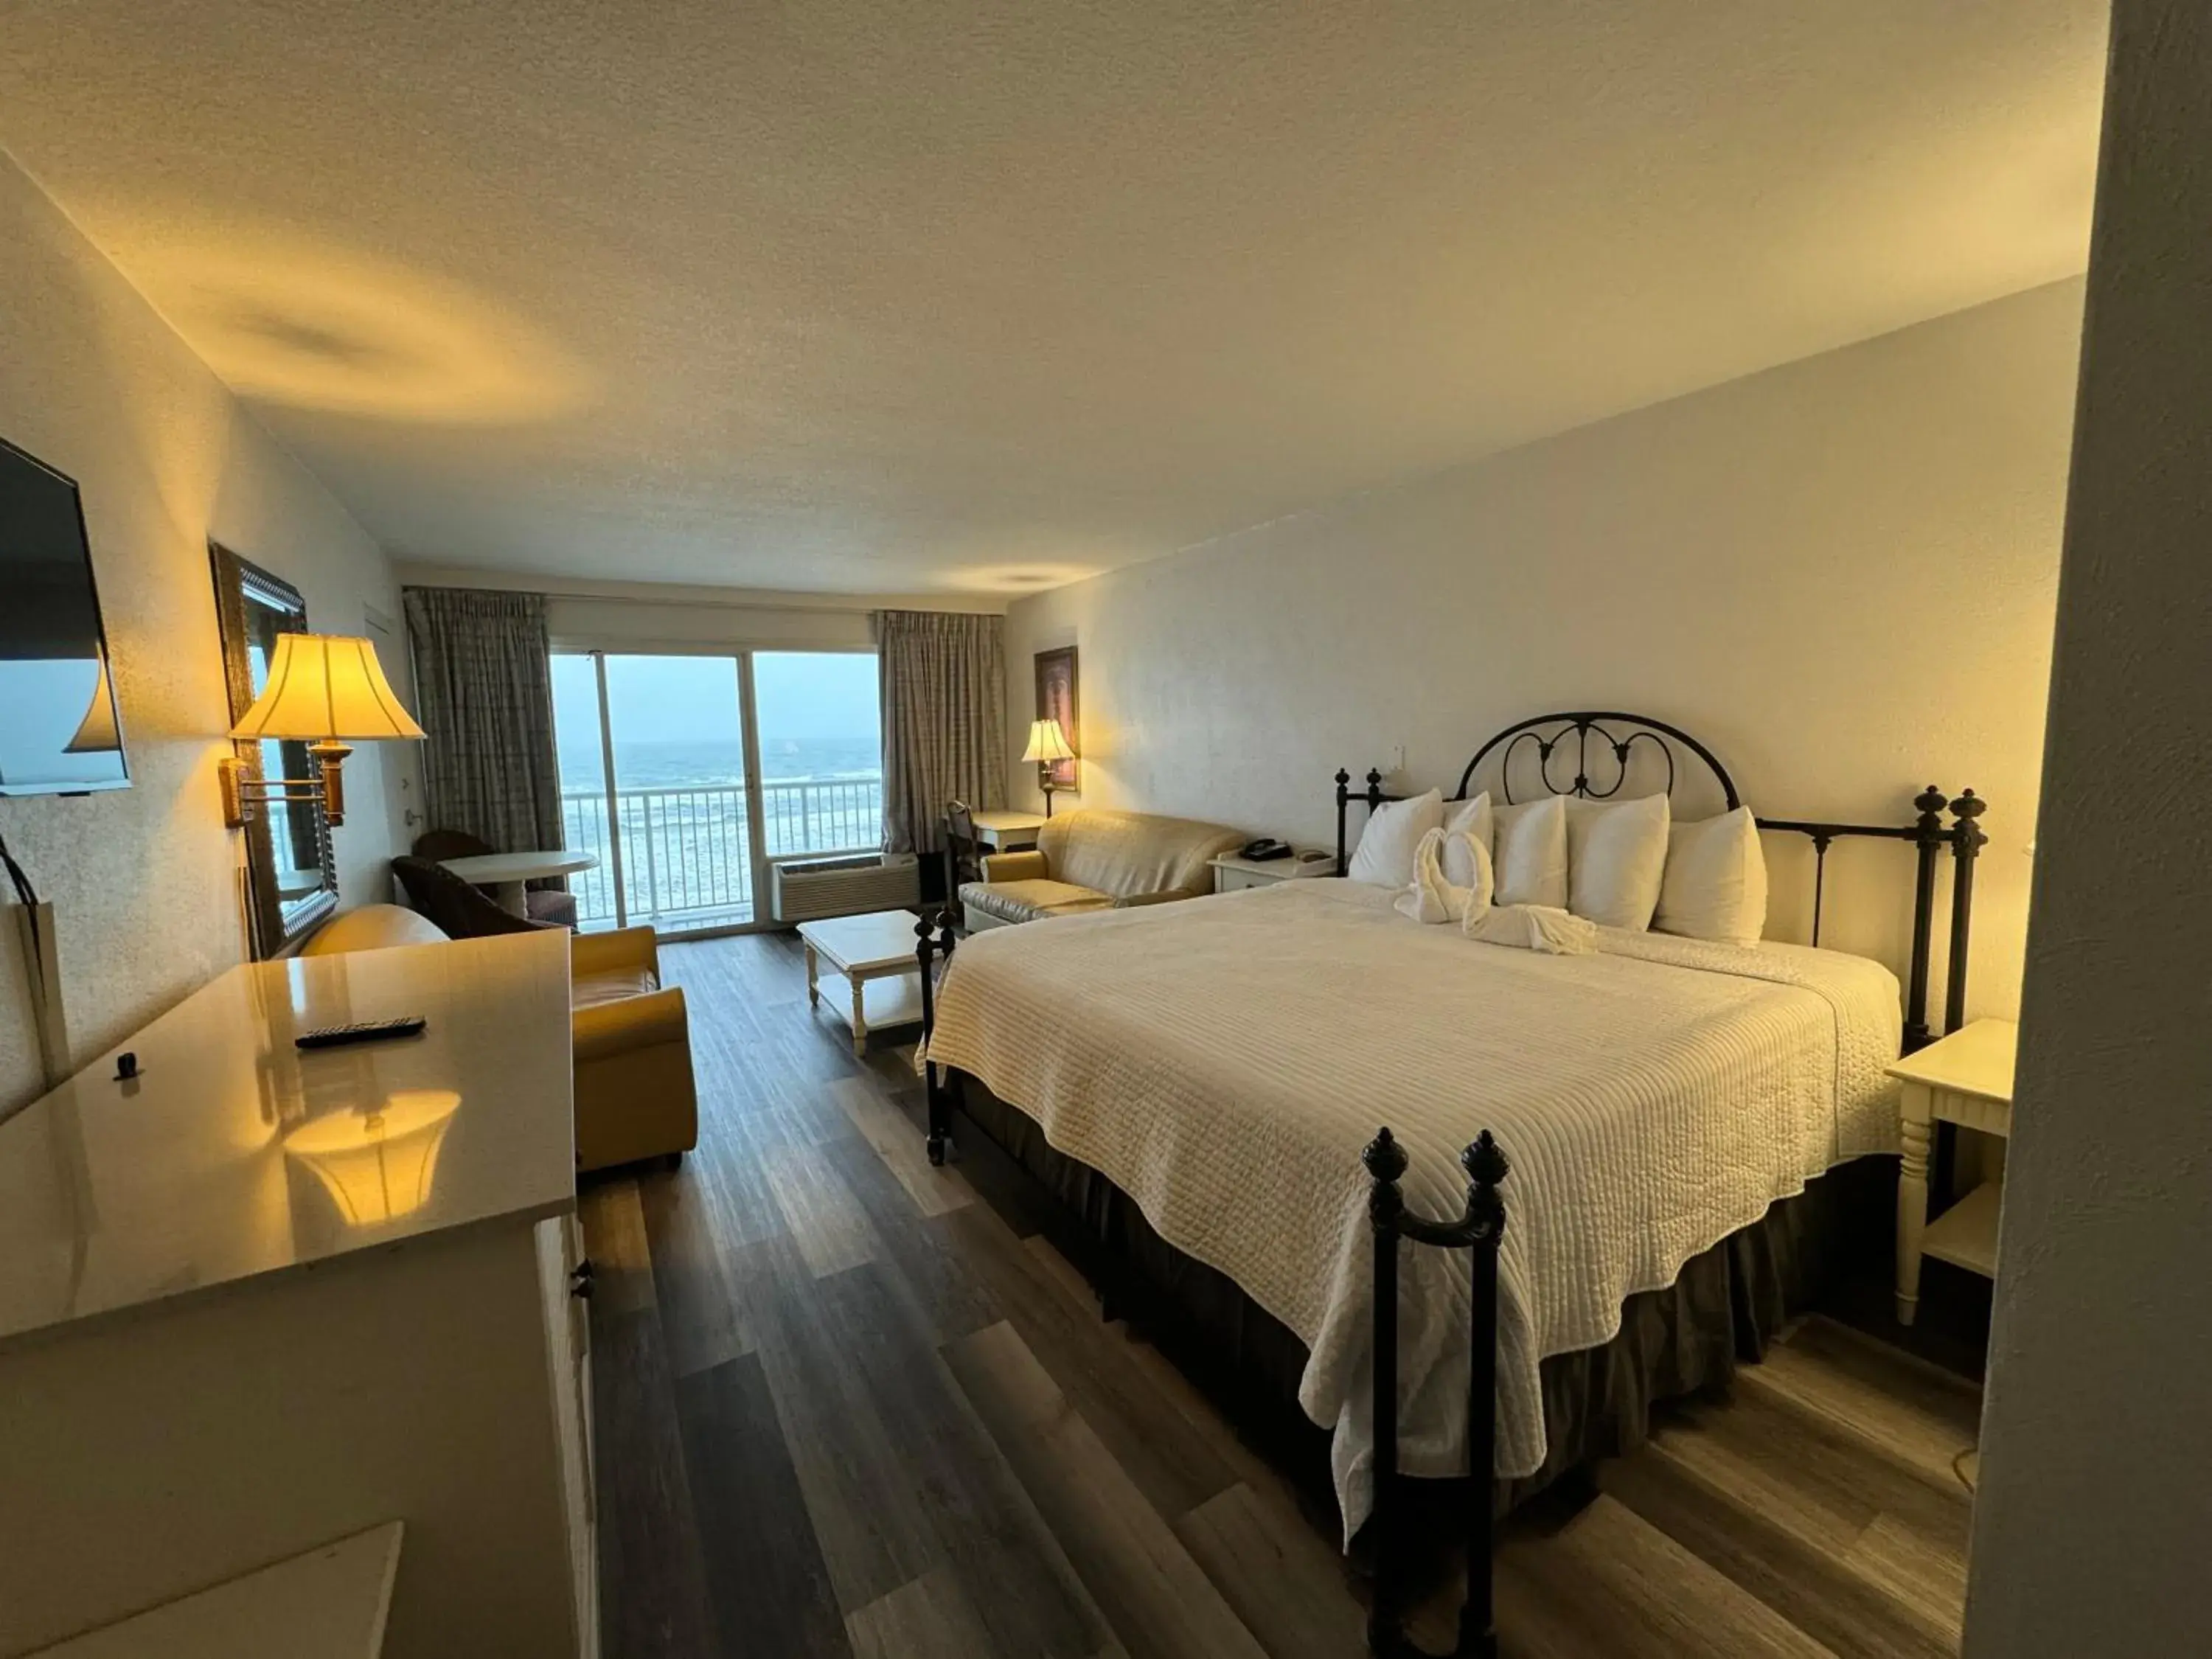 Photo of the whole room in Emerald Shores Hotel - Daytona Beach